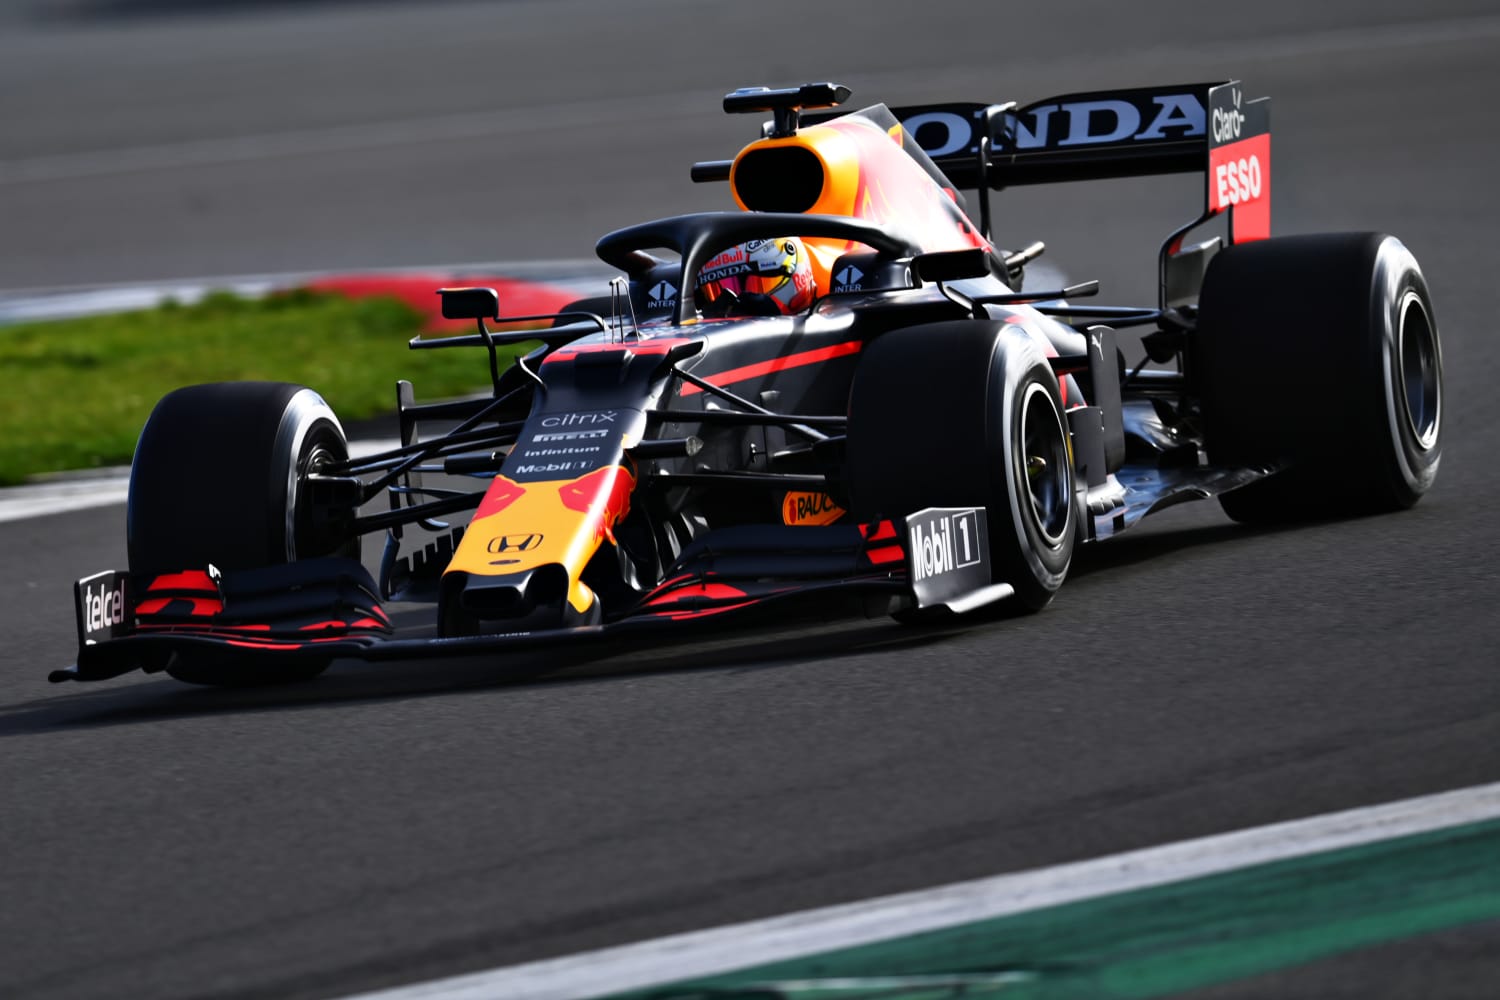 Verstappen wins Autosport's International Racing Driver of the Year Award